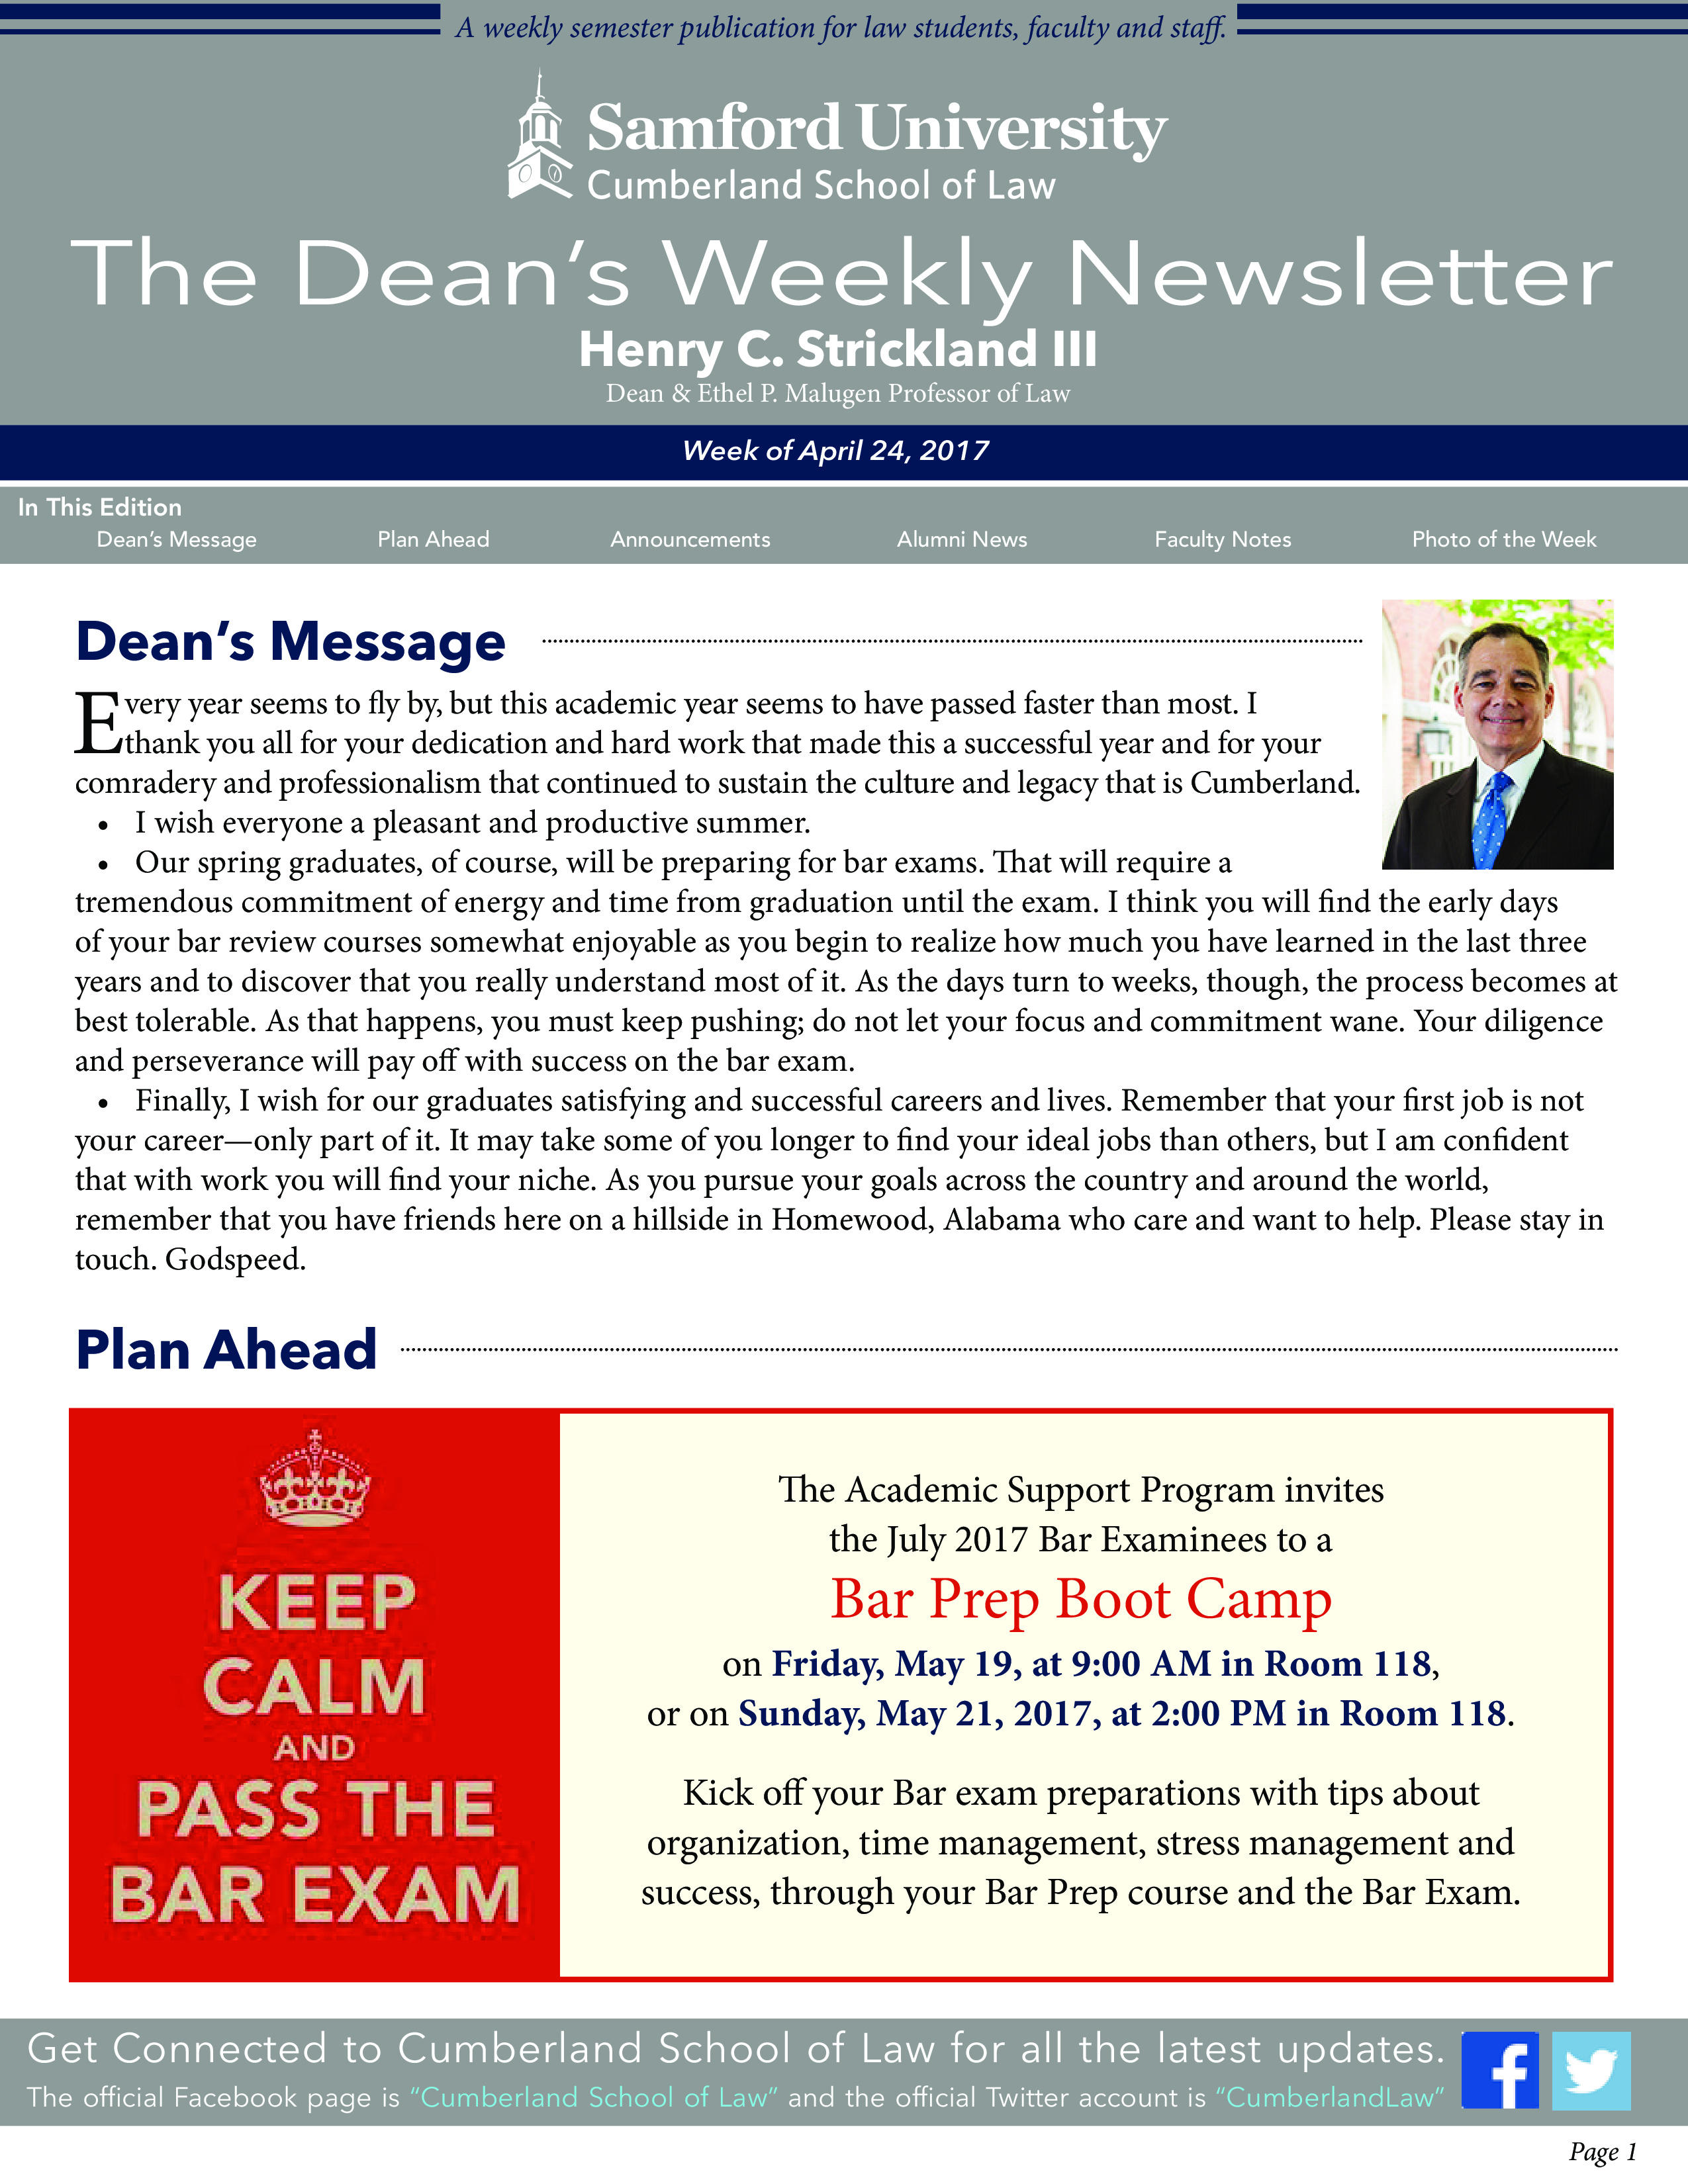 Weekly University Newsletter Example 模板